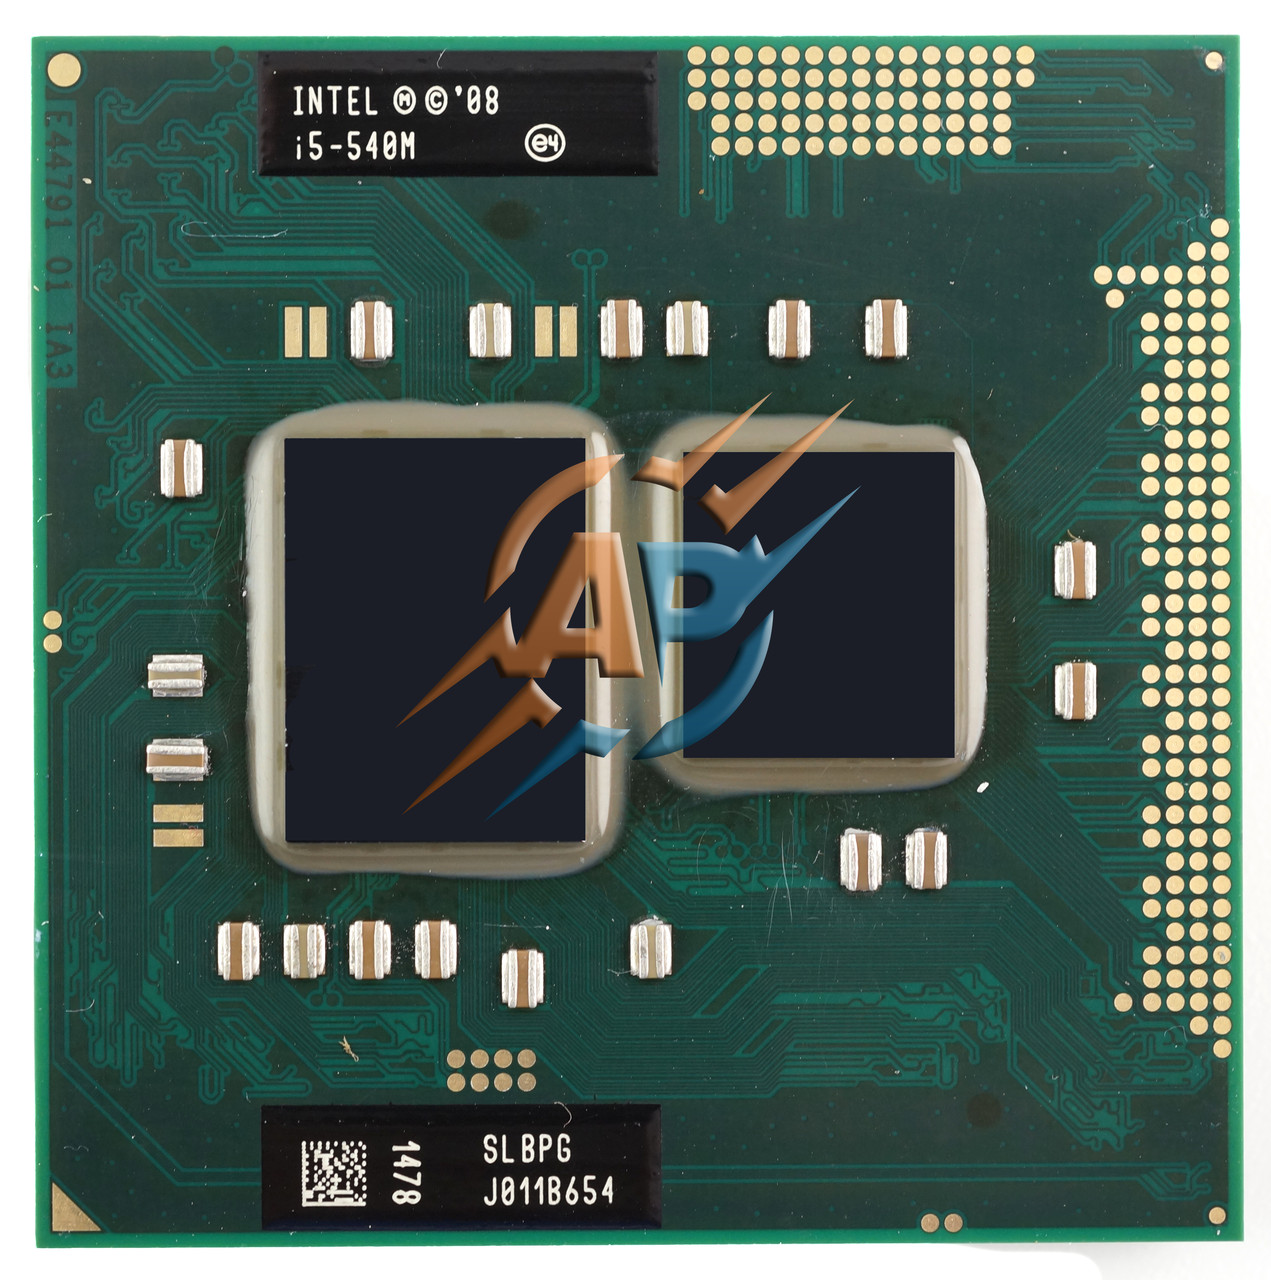 I5 480. Процессор i5 480m. Intel Core i5 520m. Intel Core i7-620m. I7-620m — cp80617003981ah / cp80617003981aj, 2.66 GHZ, l3 4 MB.